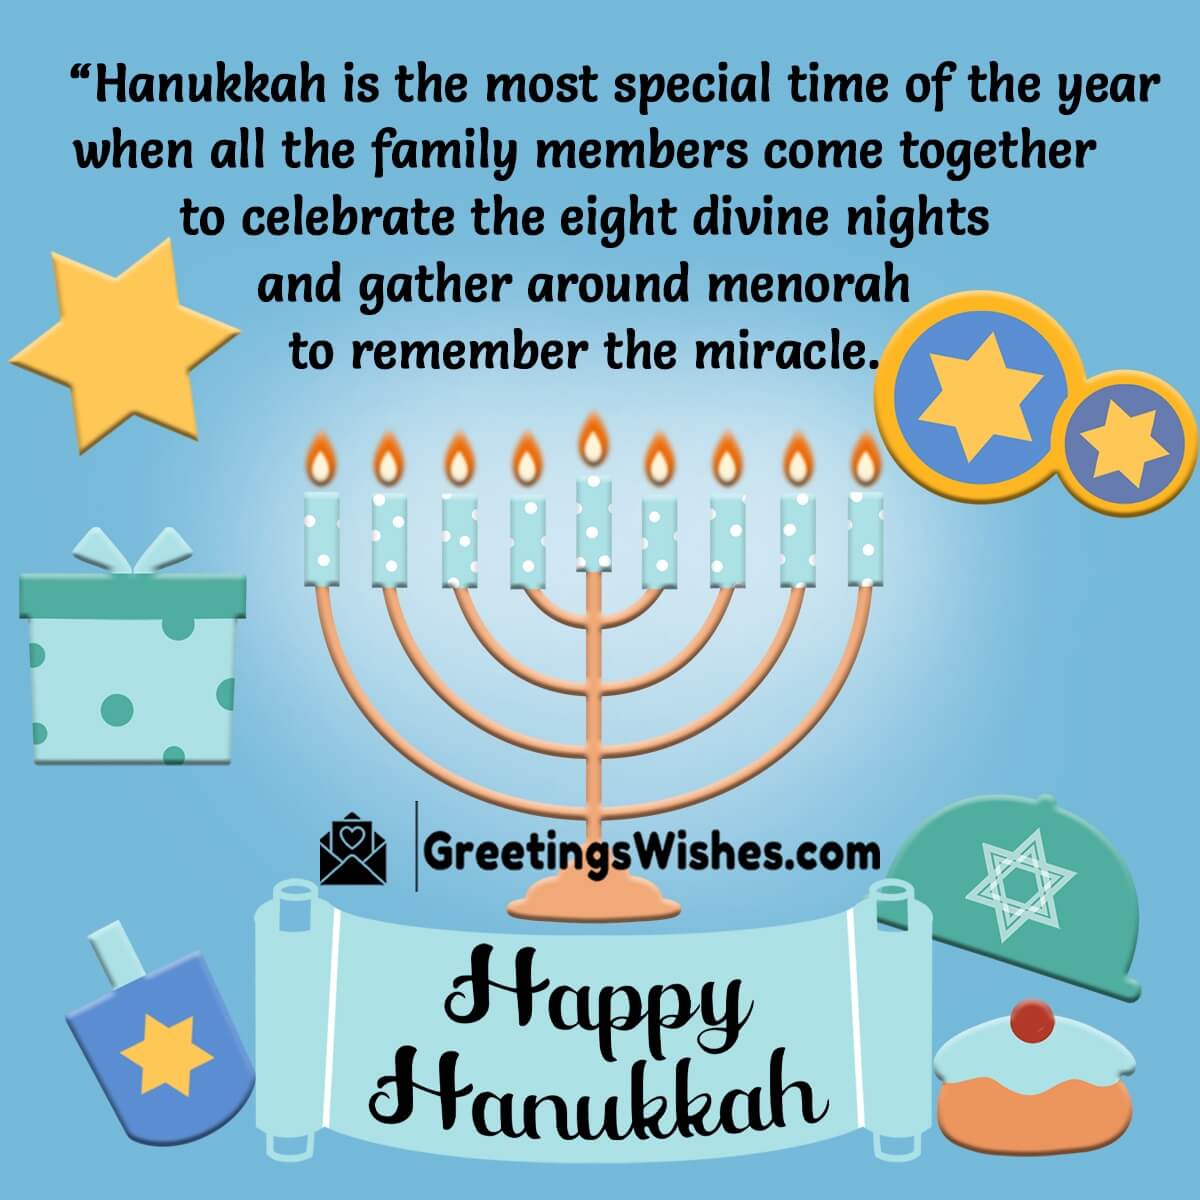 Happy Hanukkah Messages